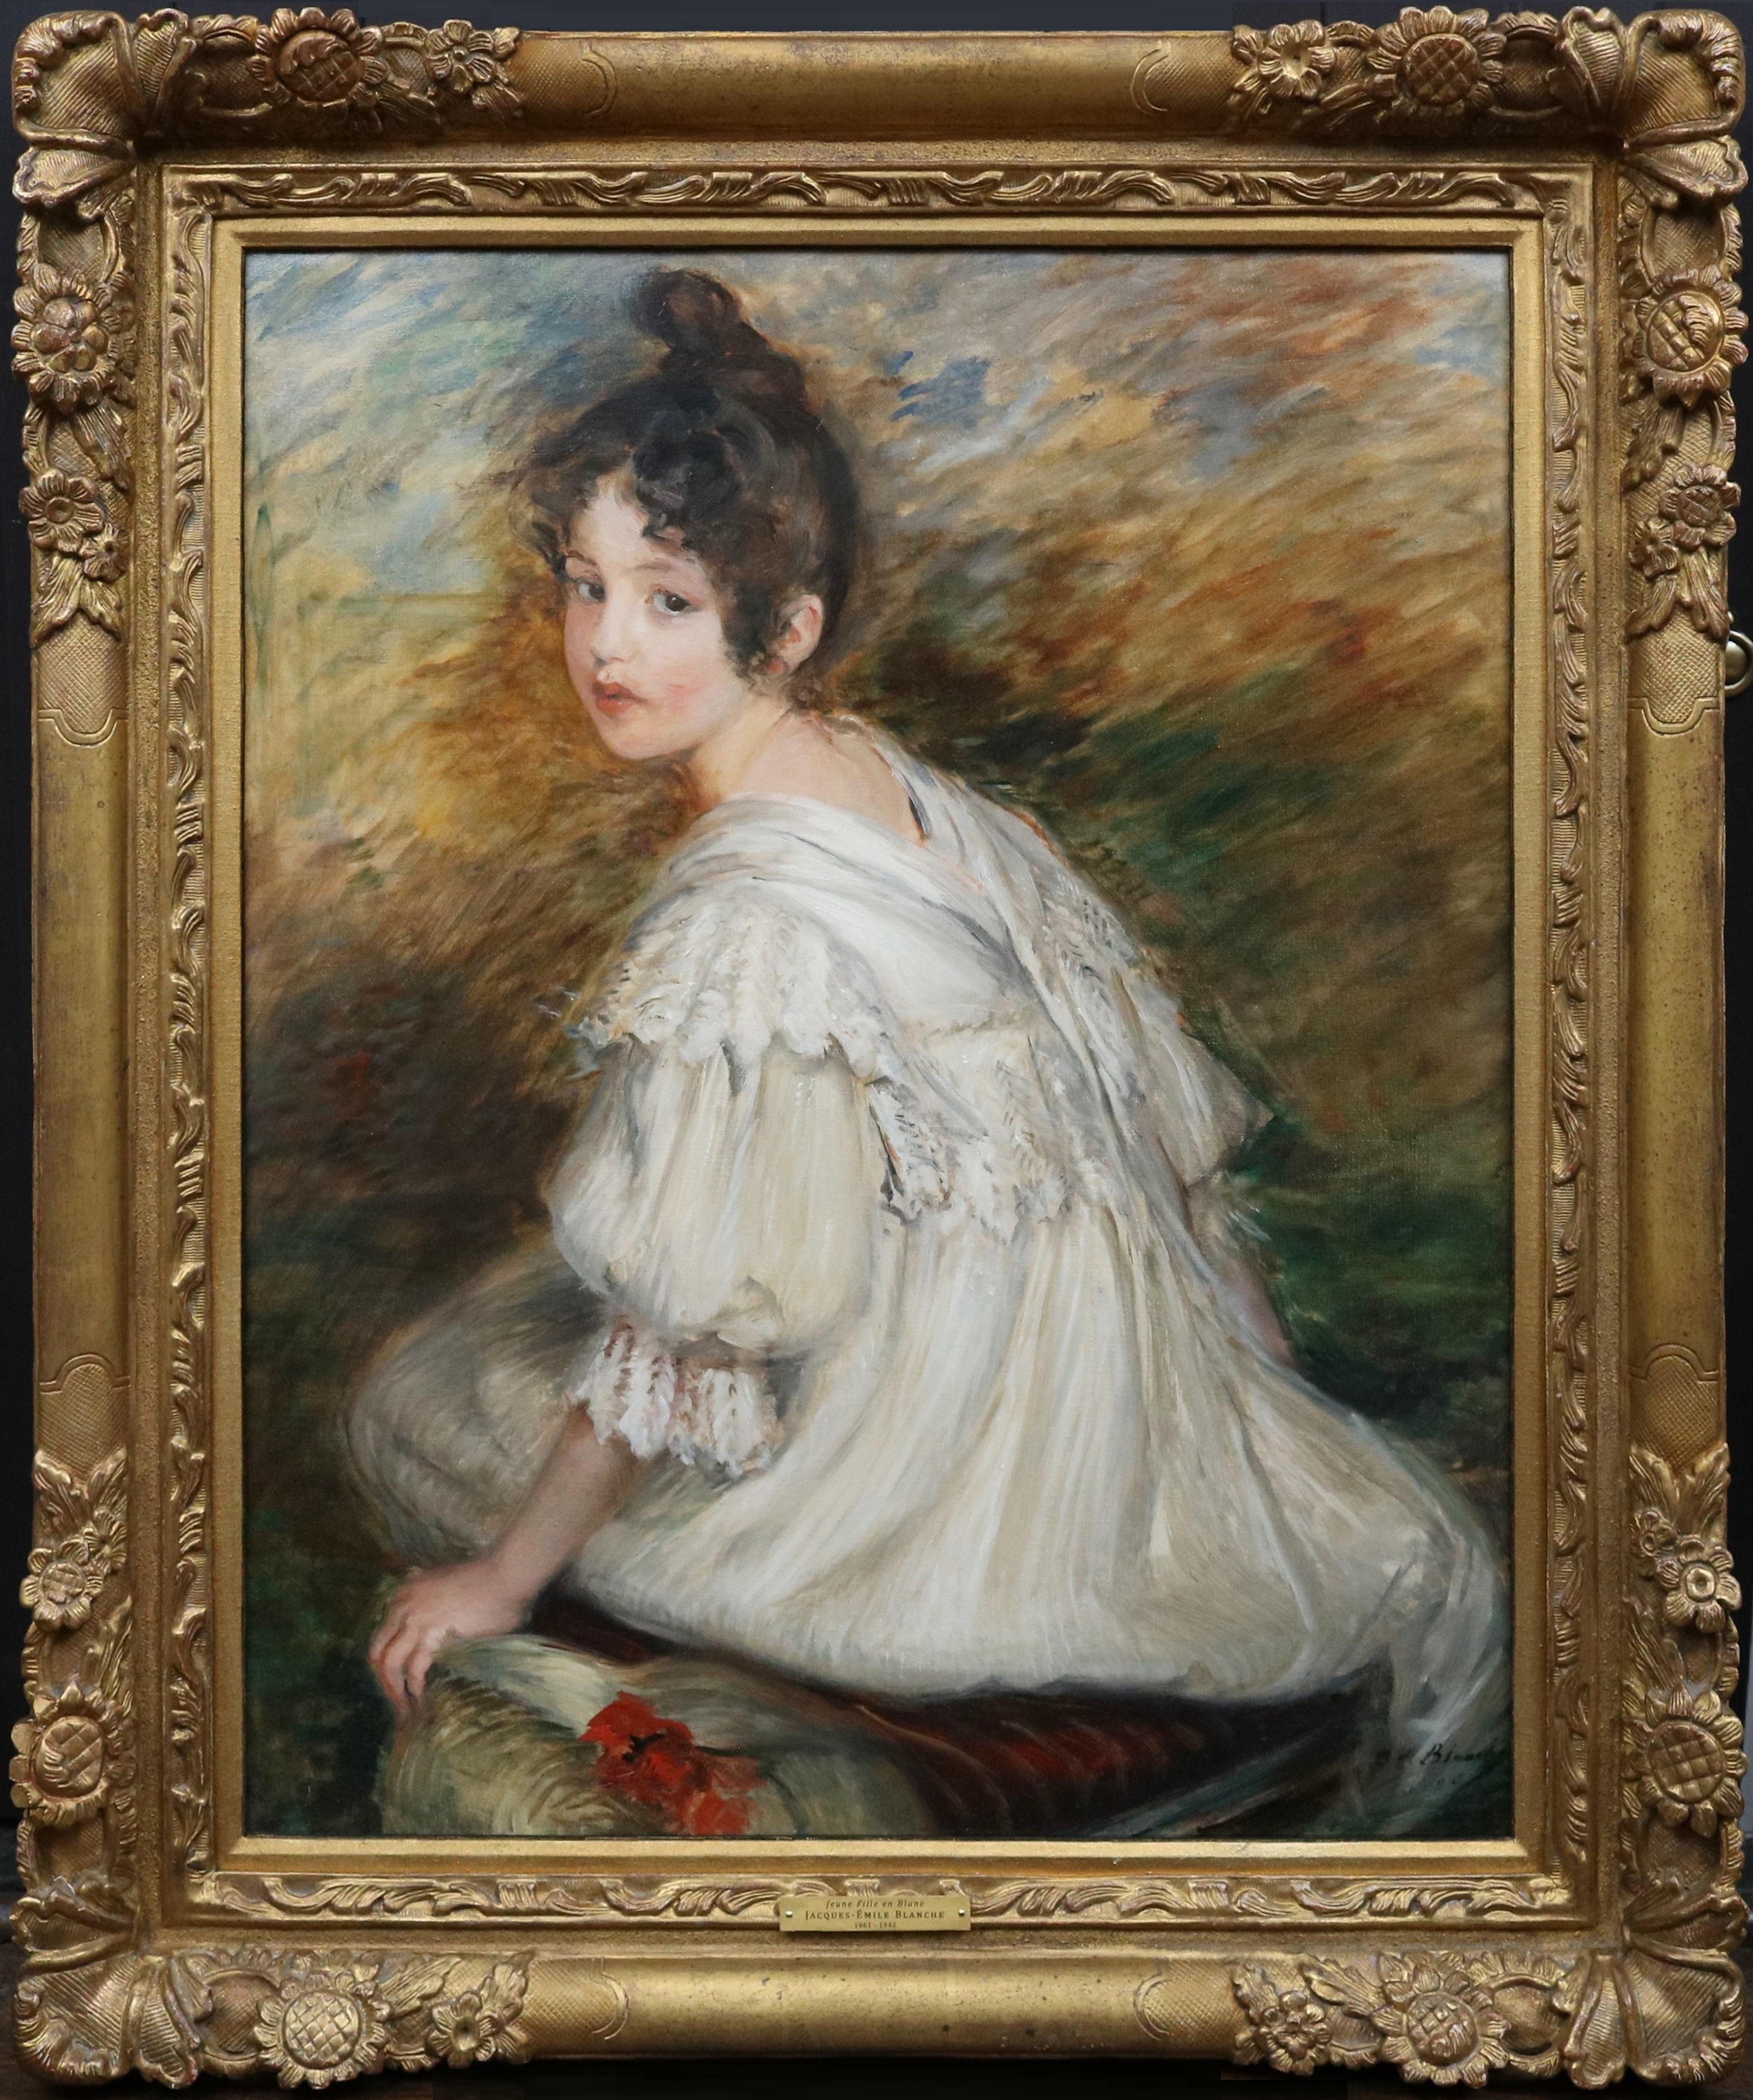 Jeune Fille en Blanc - Ölgemälde des 19. Jahrhunderts, Porträt einer jungen Pariser Schönheit  – Painting von Jacques Emile Blanche